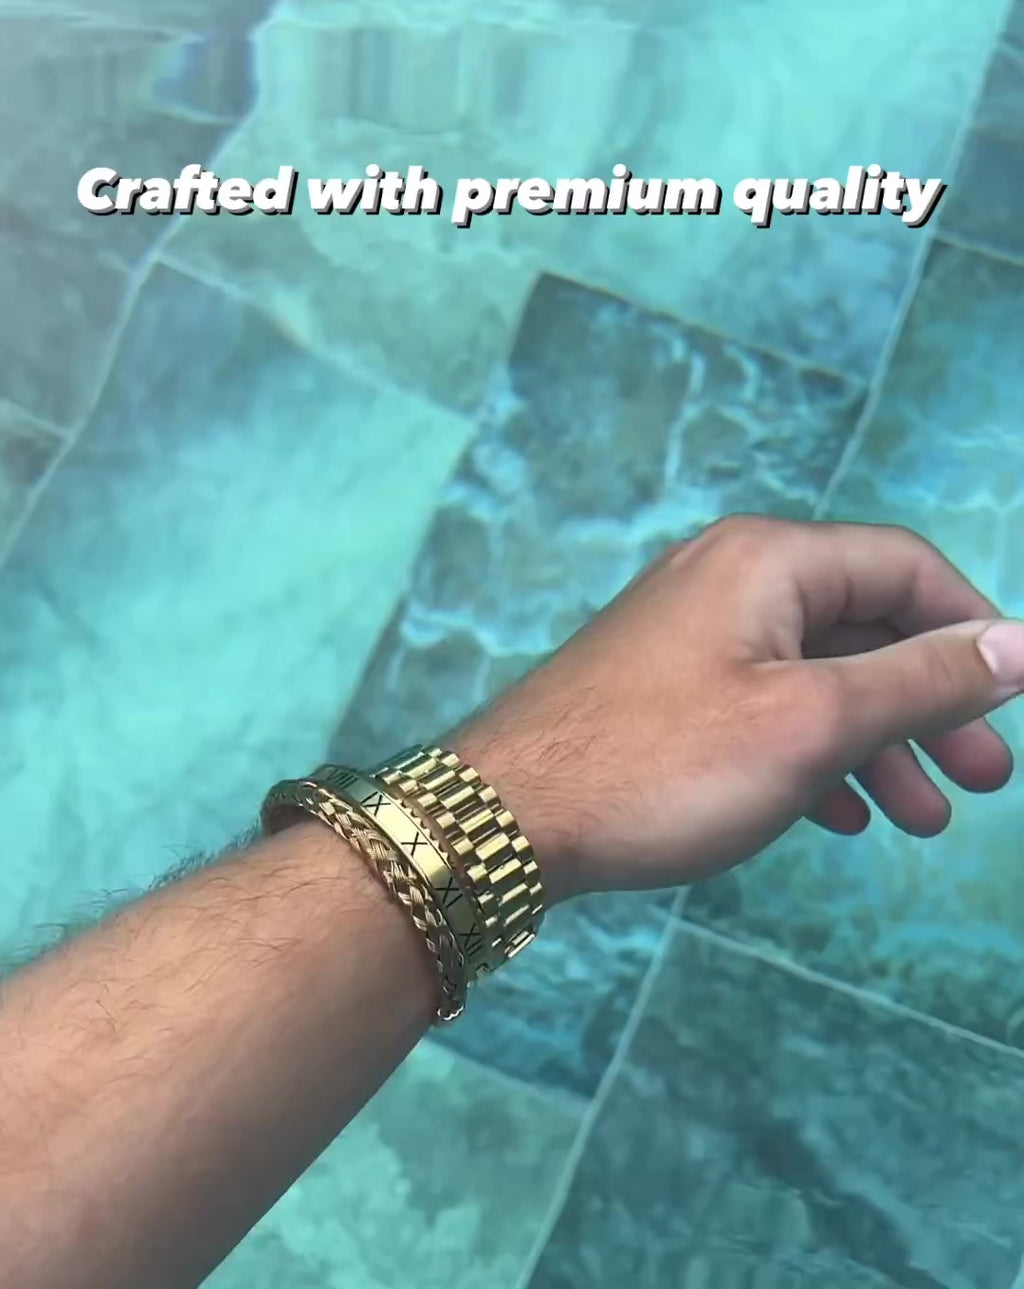 Showing the quality of the Roman Speed bracelet Gold Edition - Emils Jewellery bezel style bracelet